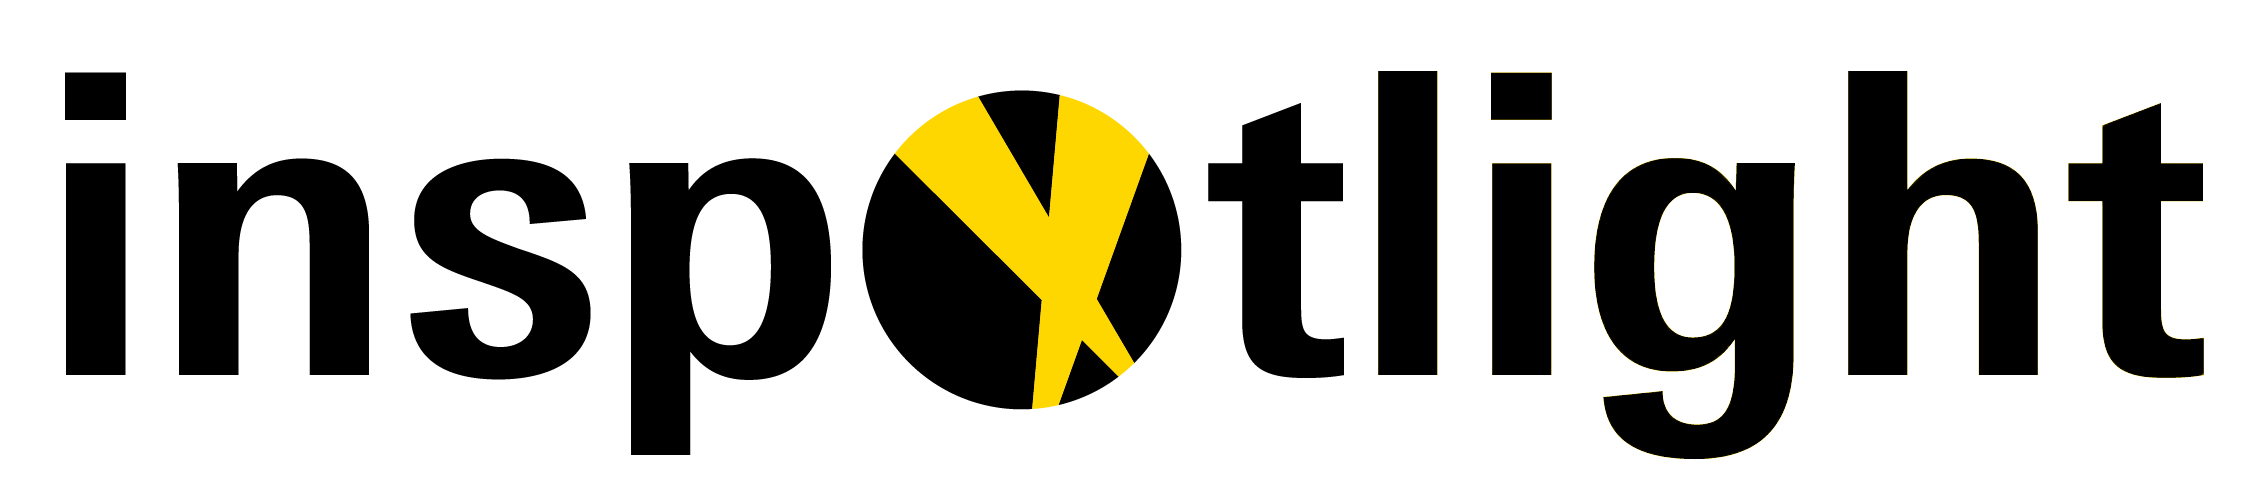 isl-logo-black